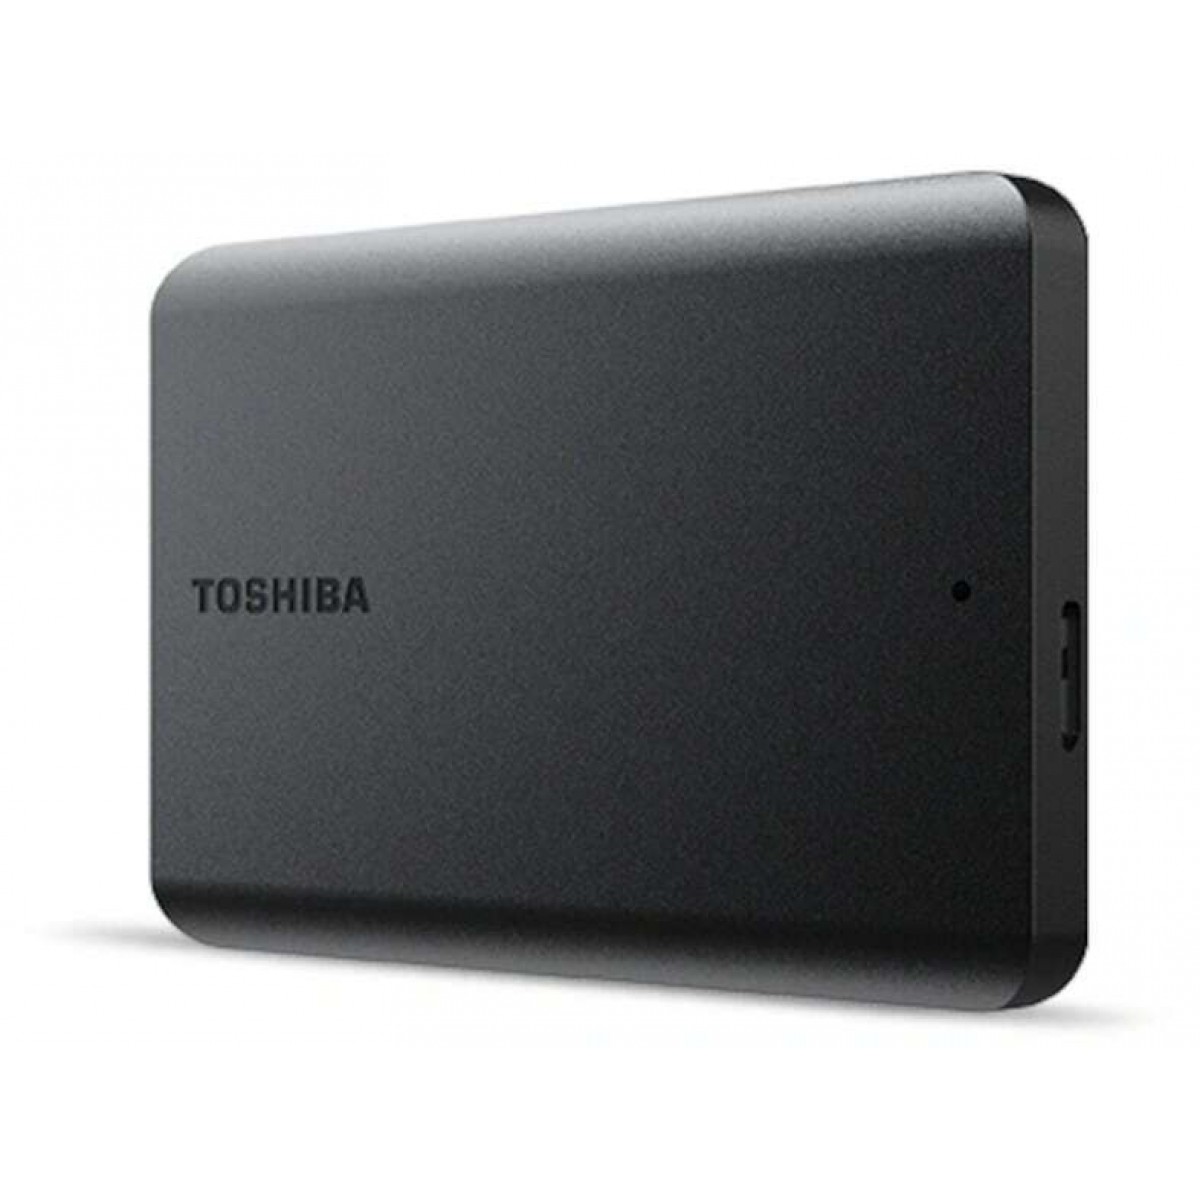 HDTB540EK3CA, Toshiba CANVIO BASICS 4TB BLACK